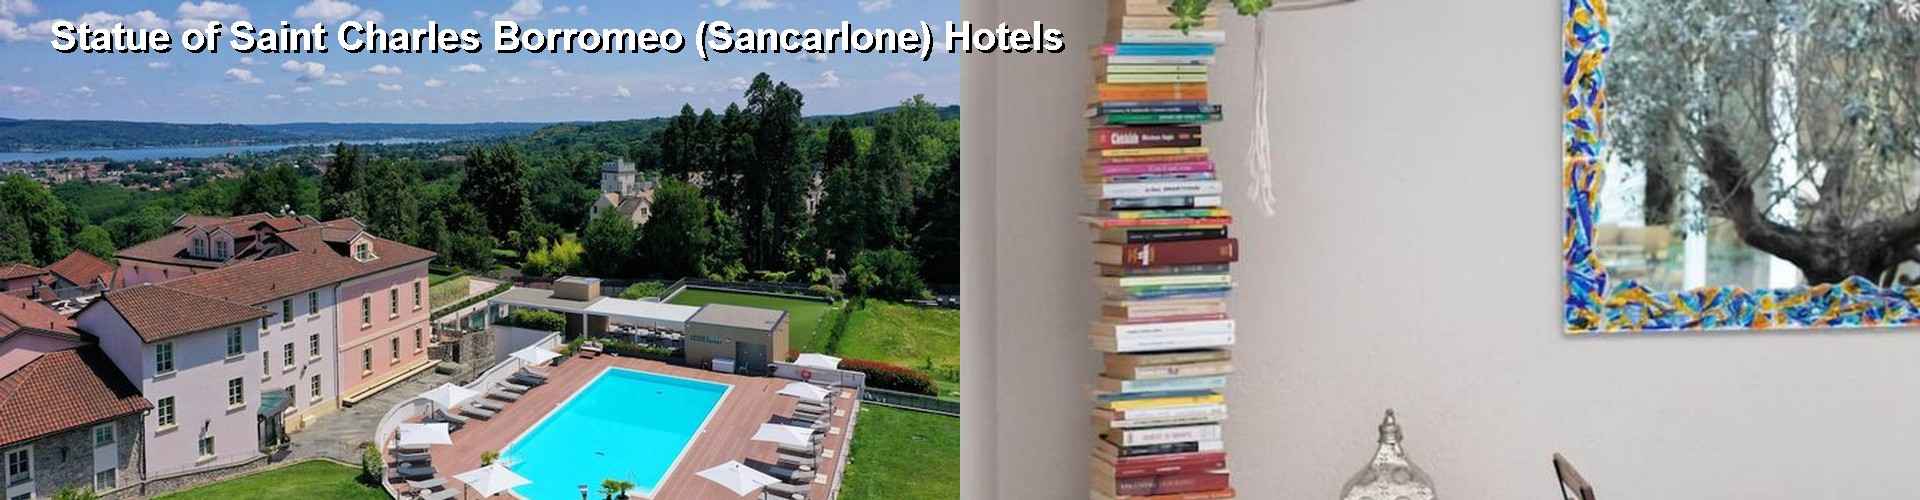 5 Best Hotels near Statue of Saint Charles Borromeo (Sancarlone)